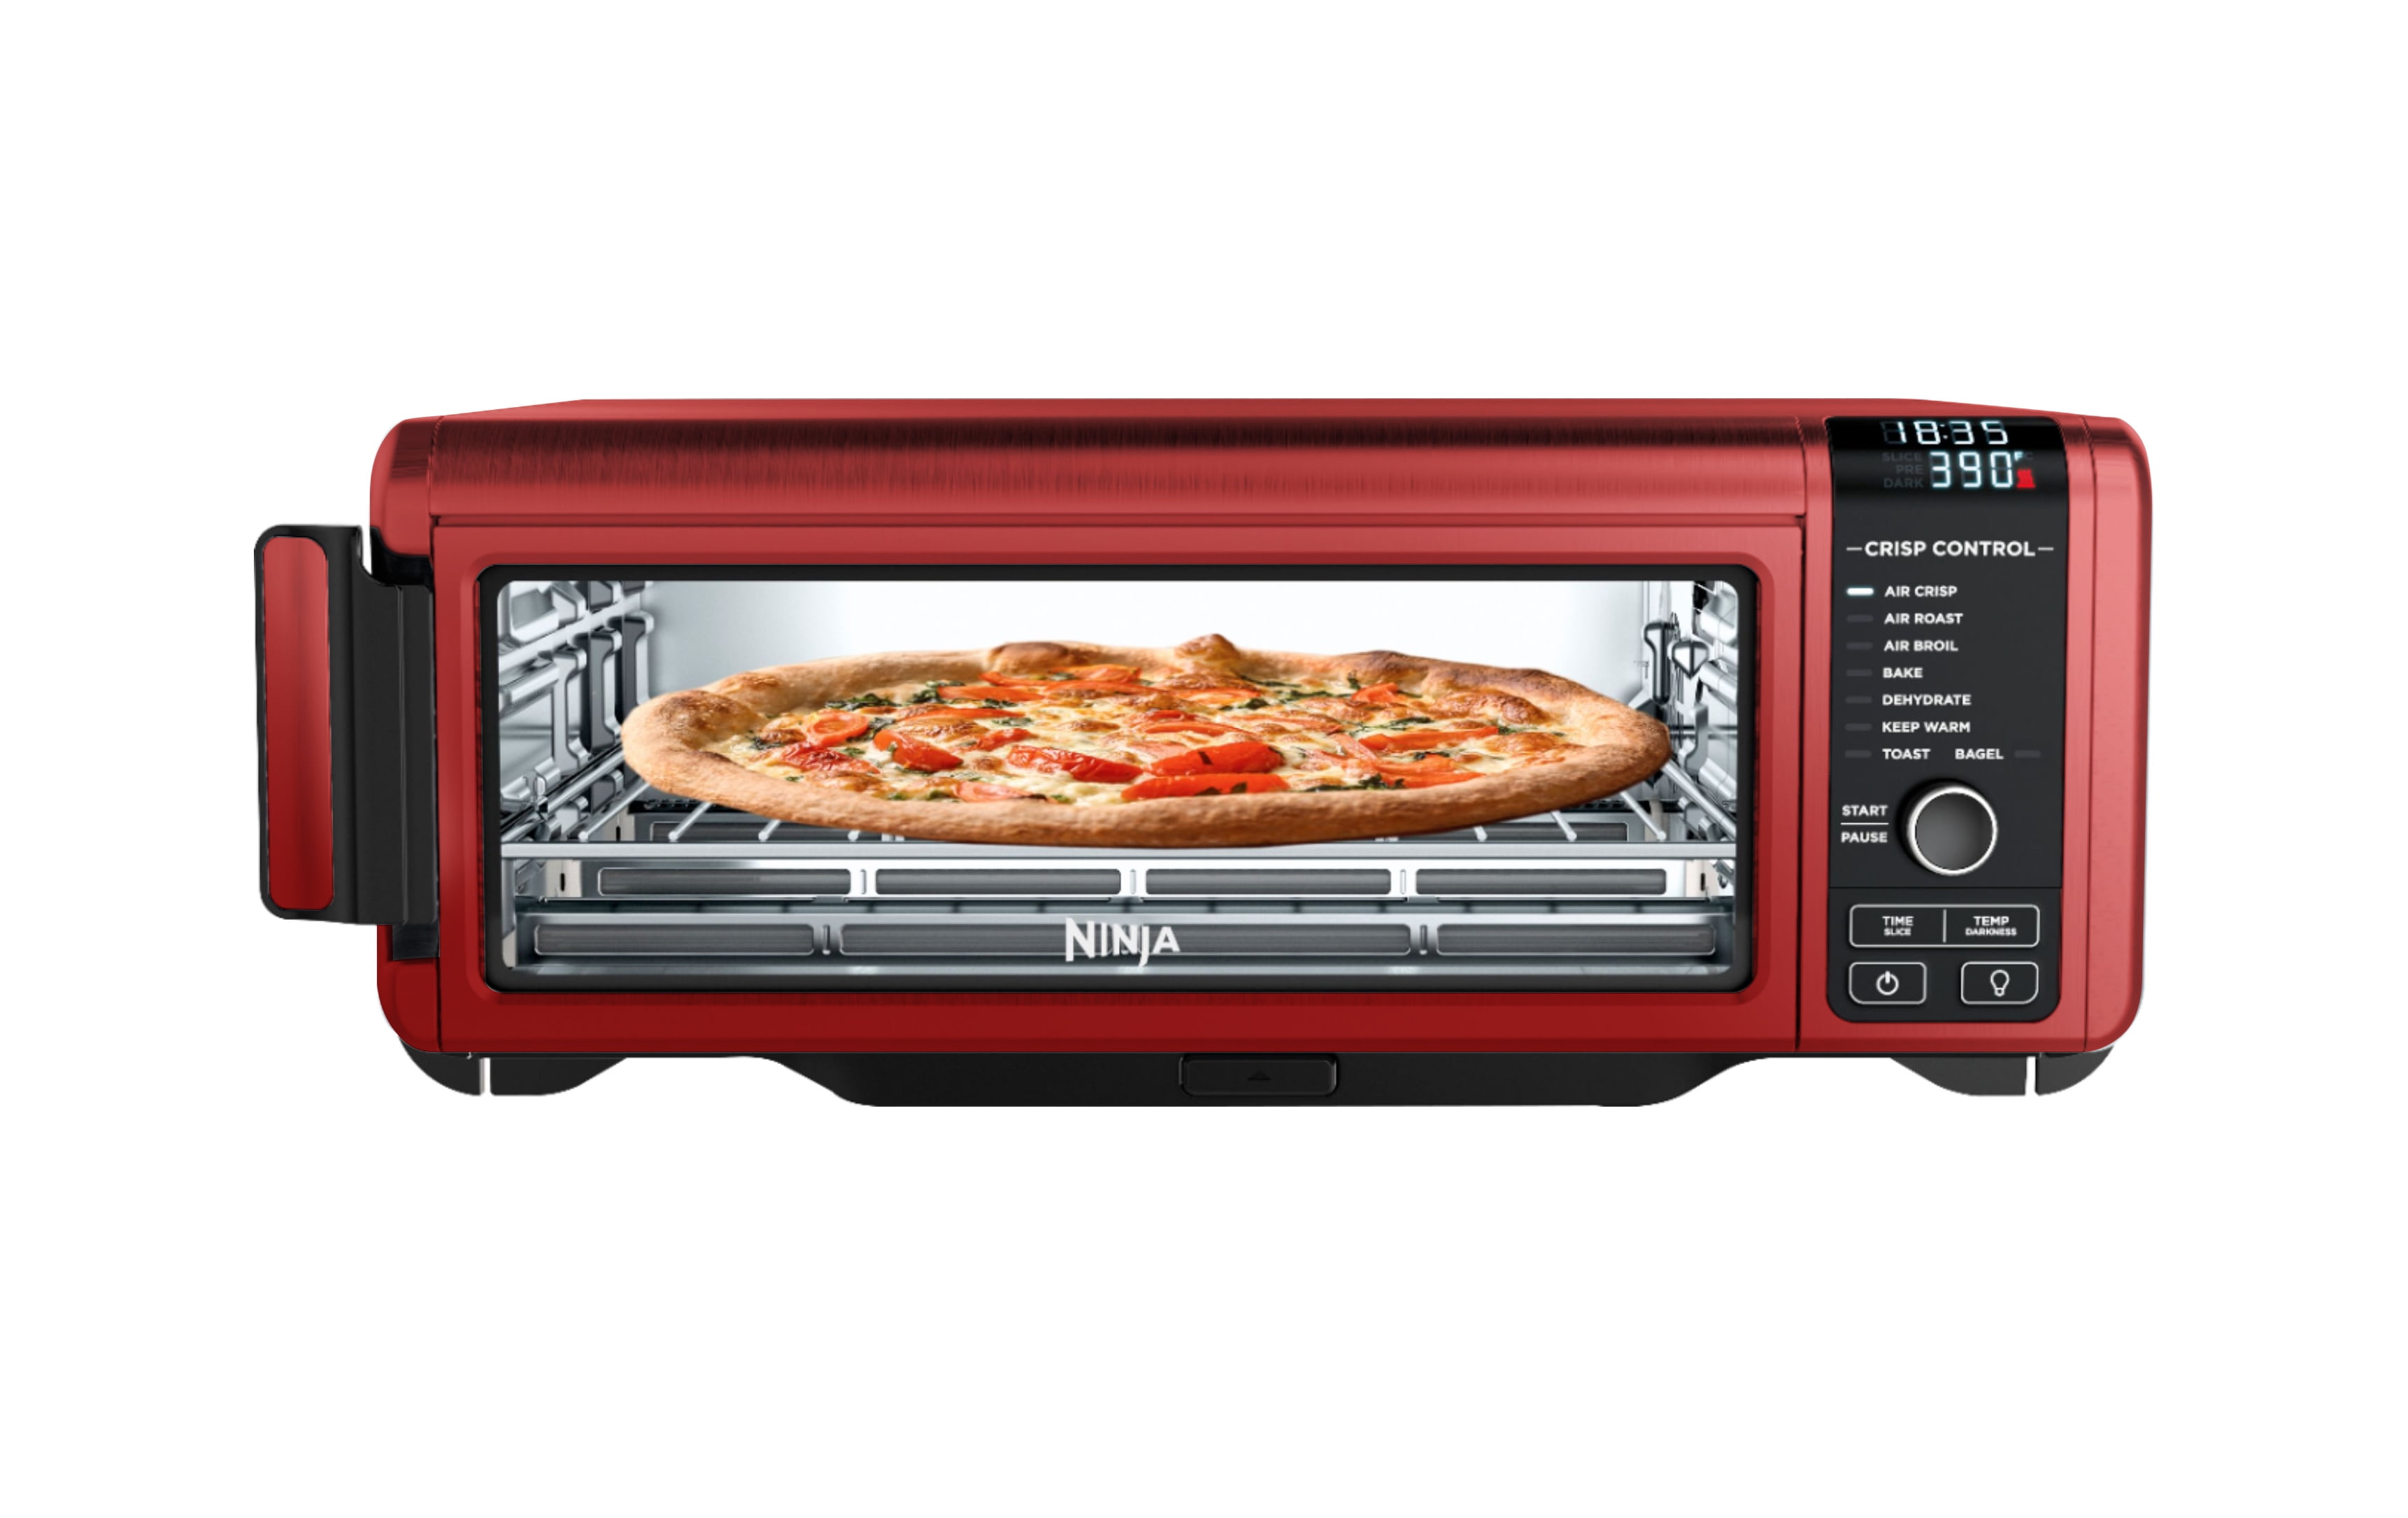 Ninja SP101 Foodi 8-in-1 Digital Air Fry, Large Toaster Oven Keep Warm-RED